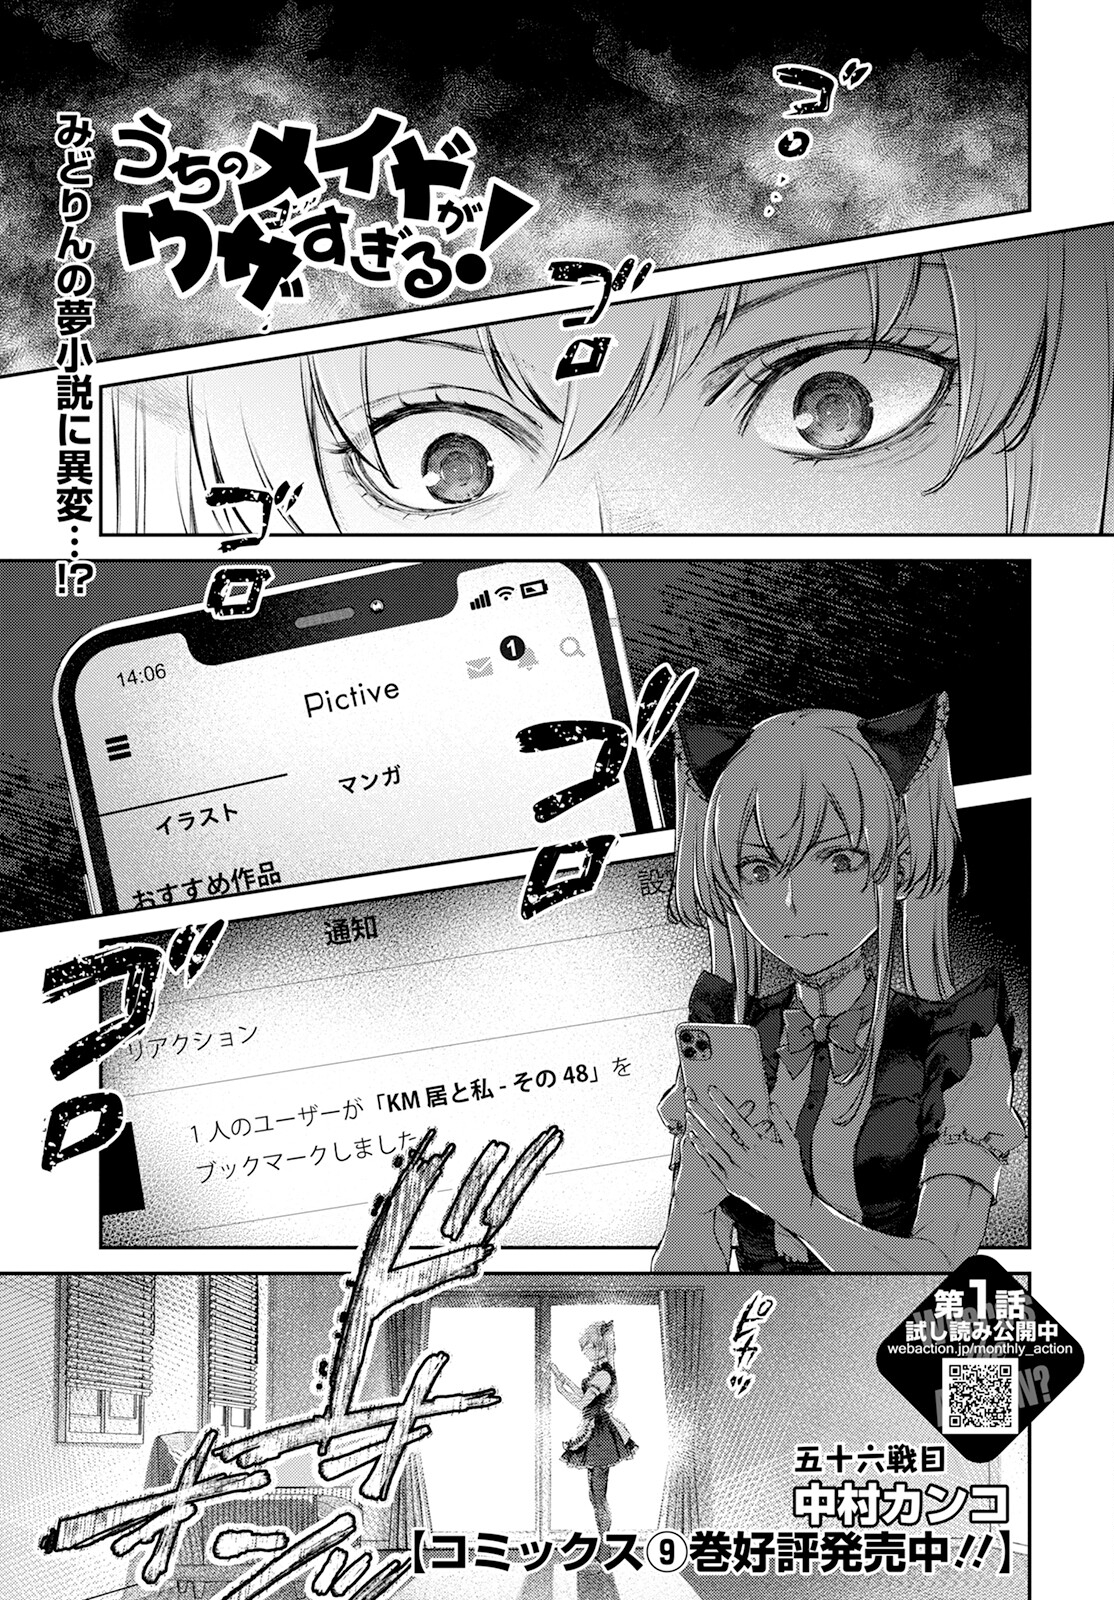 Uchi no Maid ga Uzasugiru! - Chapter 56 - Page 1